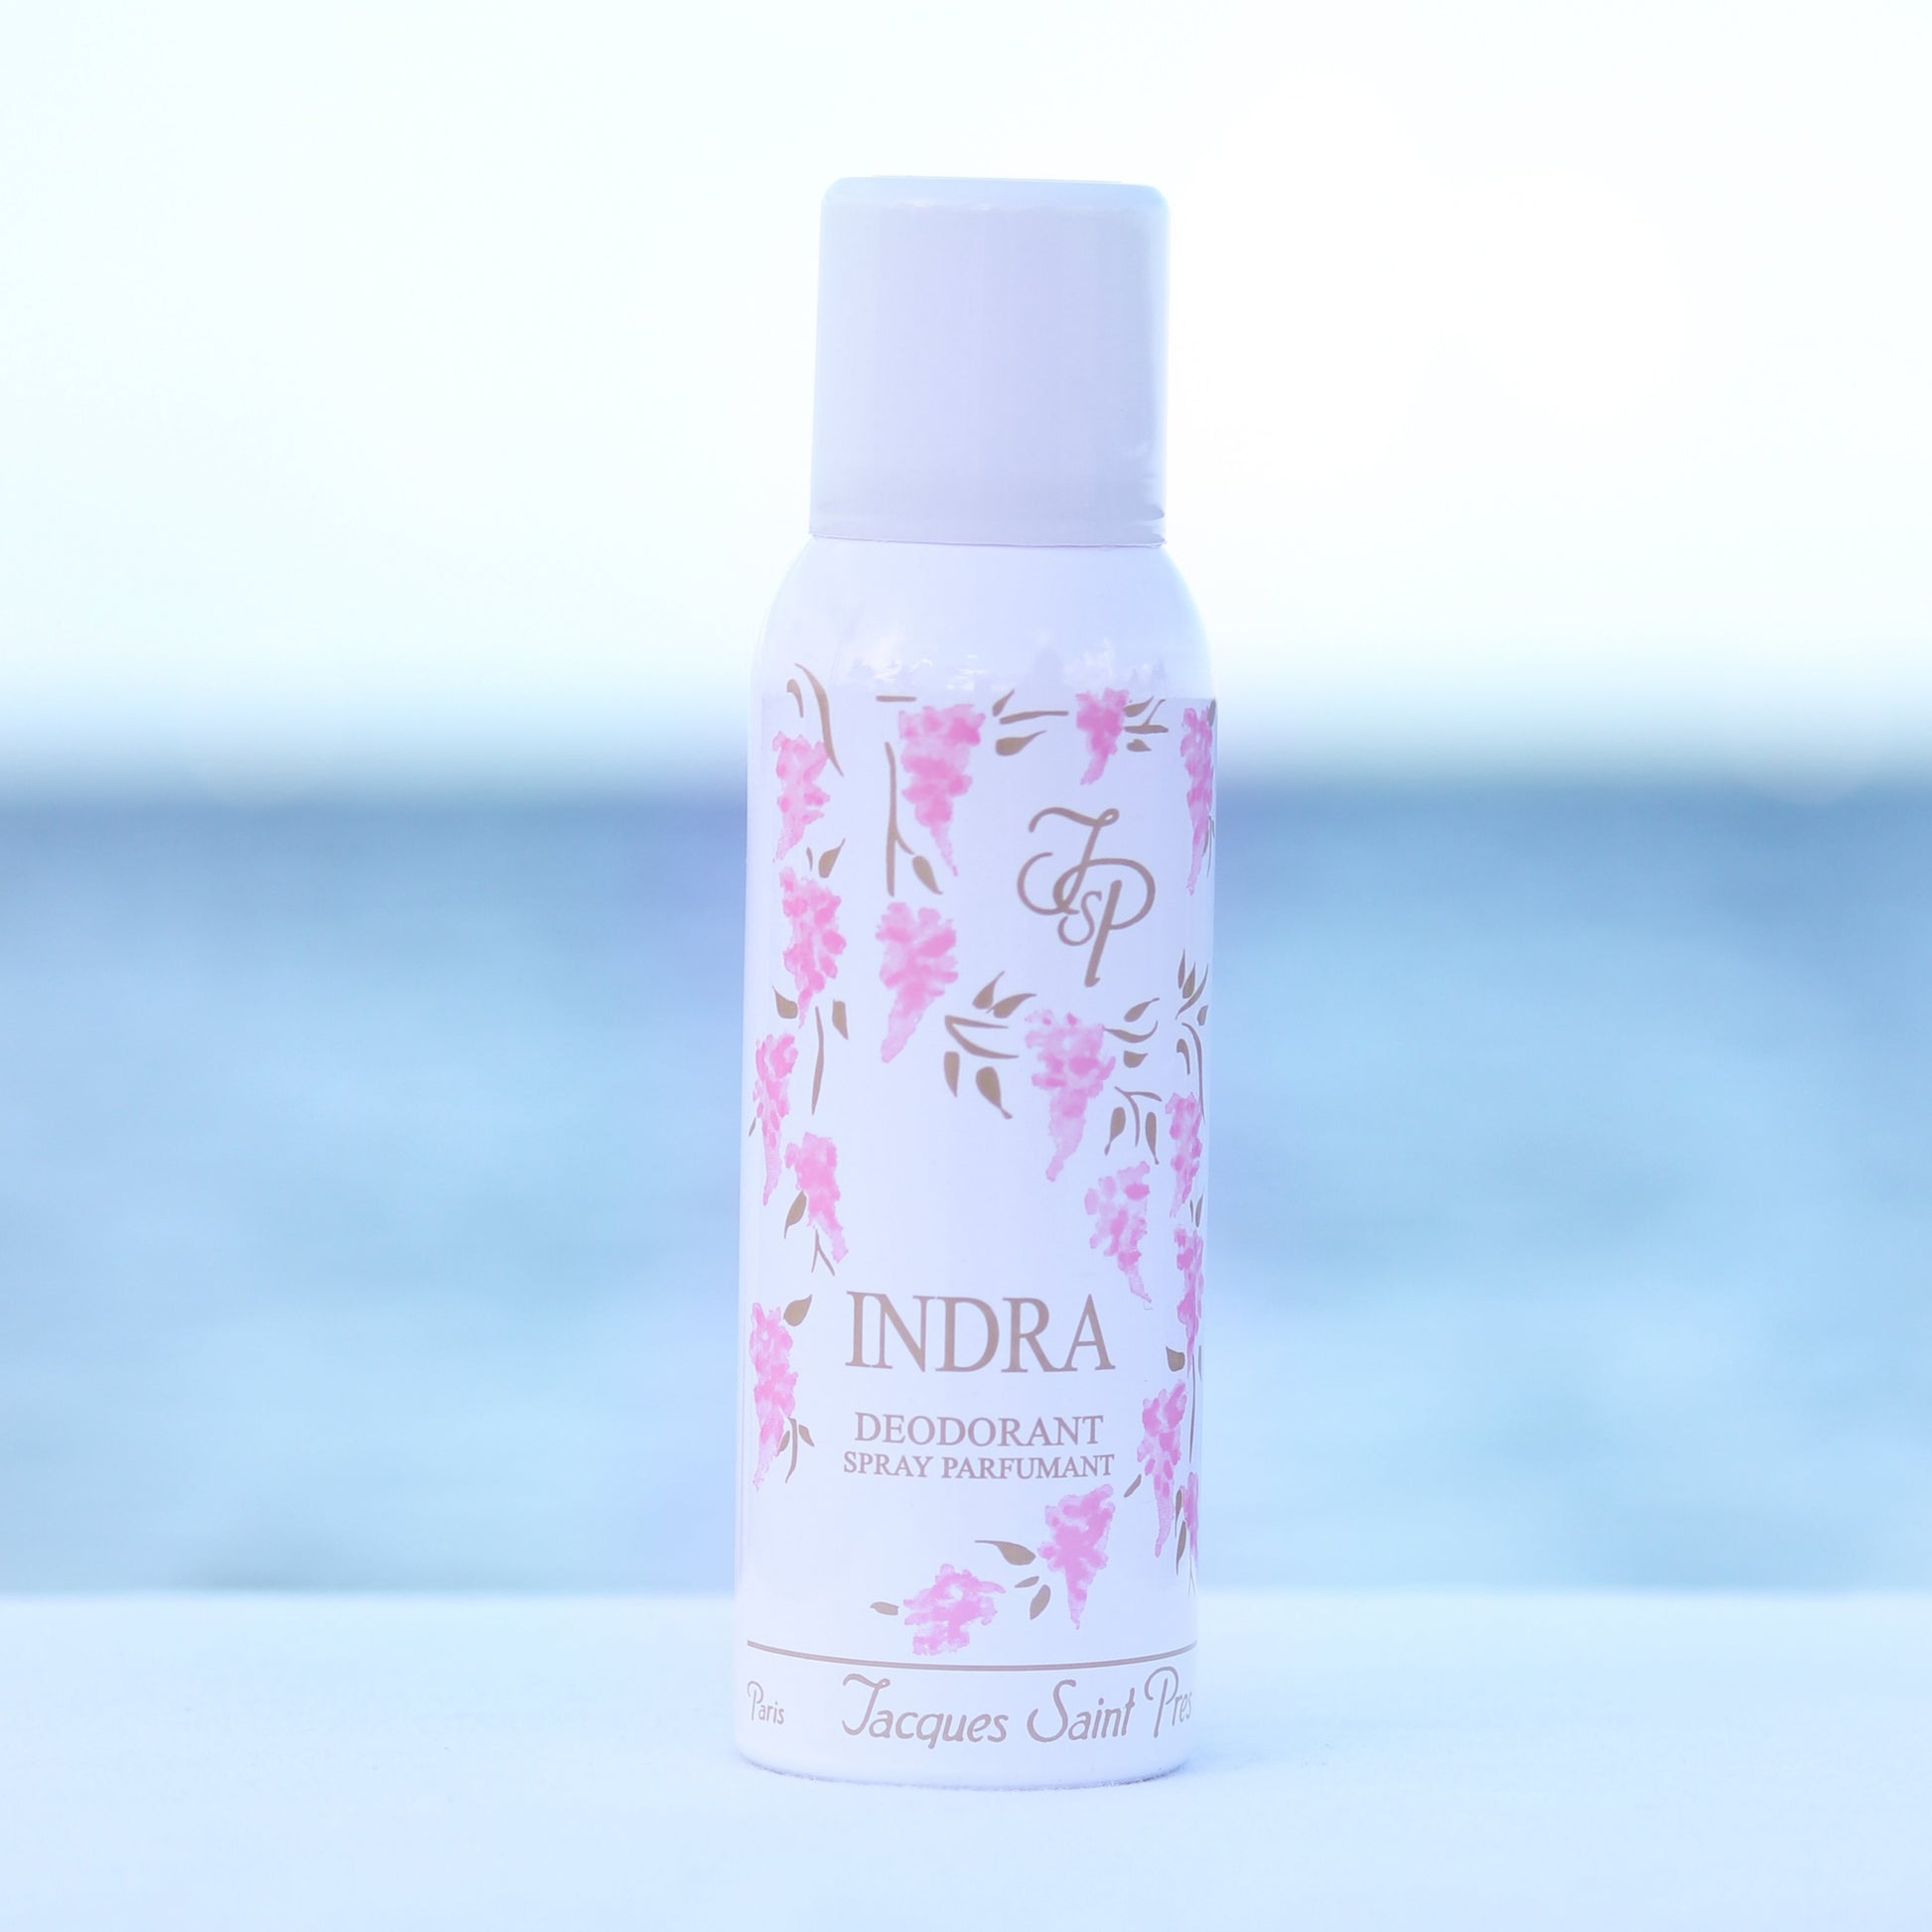 Indra 4.0 oz Deodorant Spray by Jacques Saint Pres